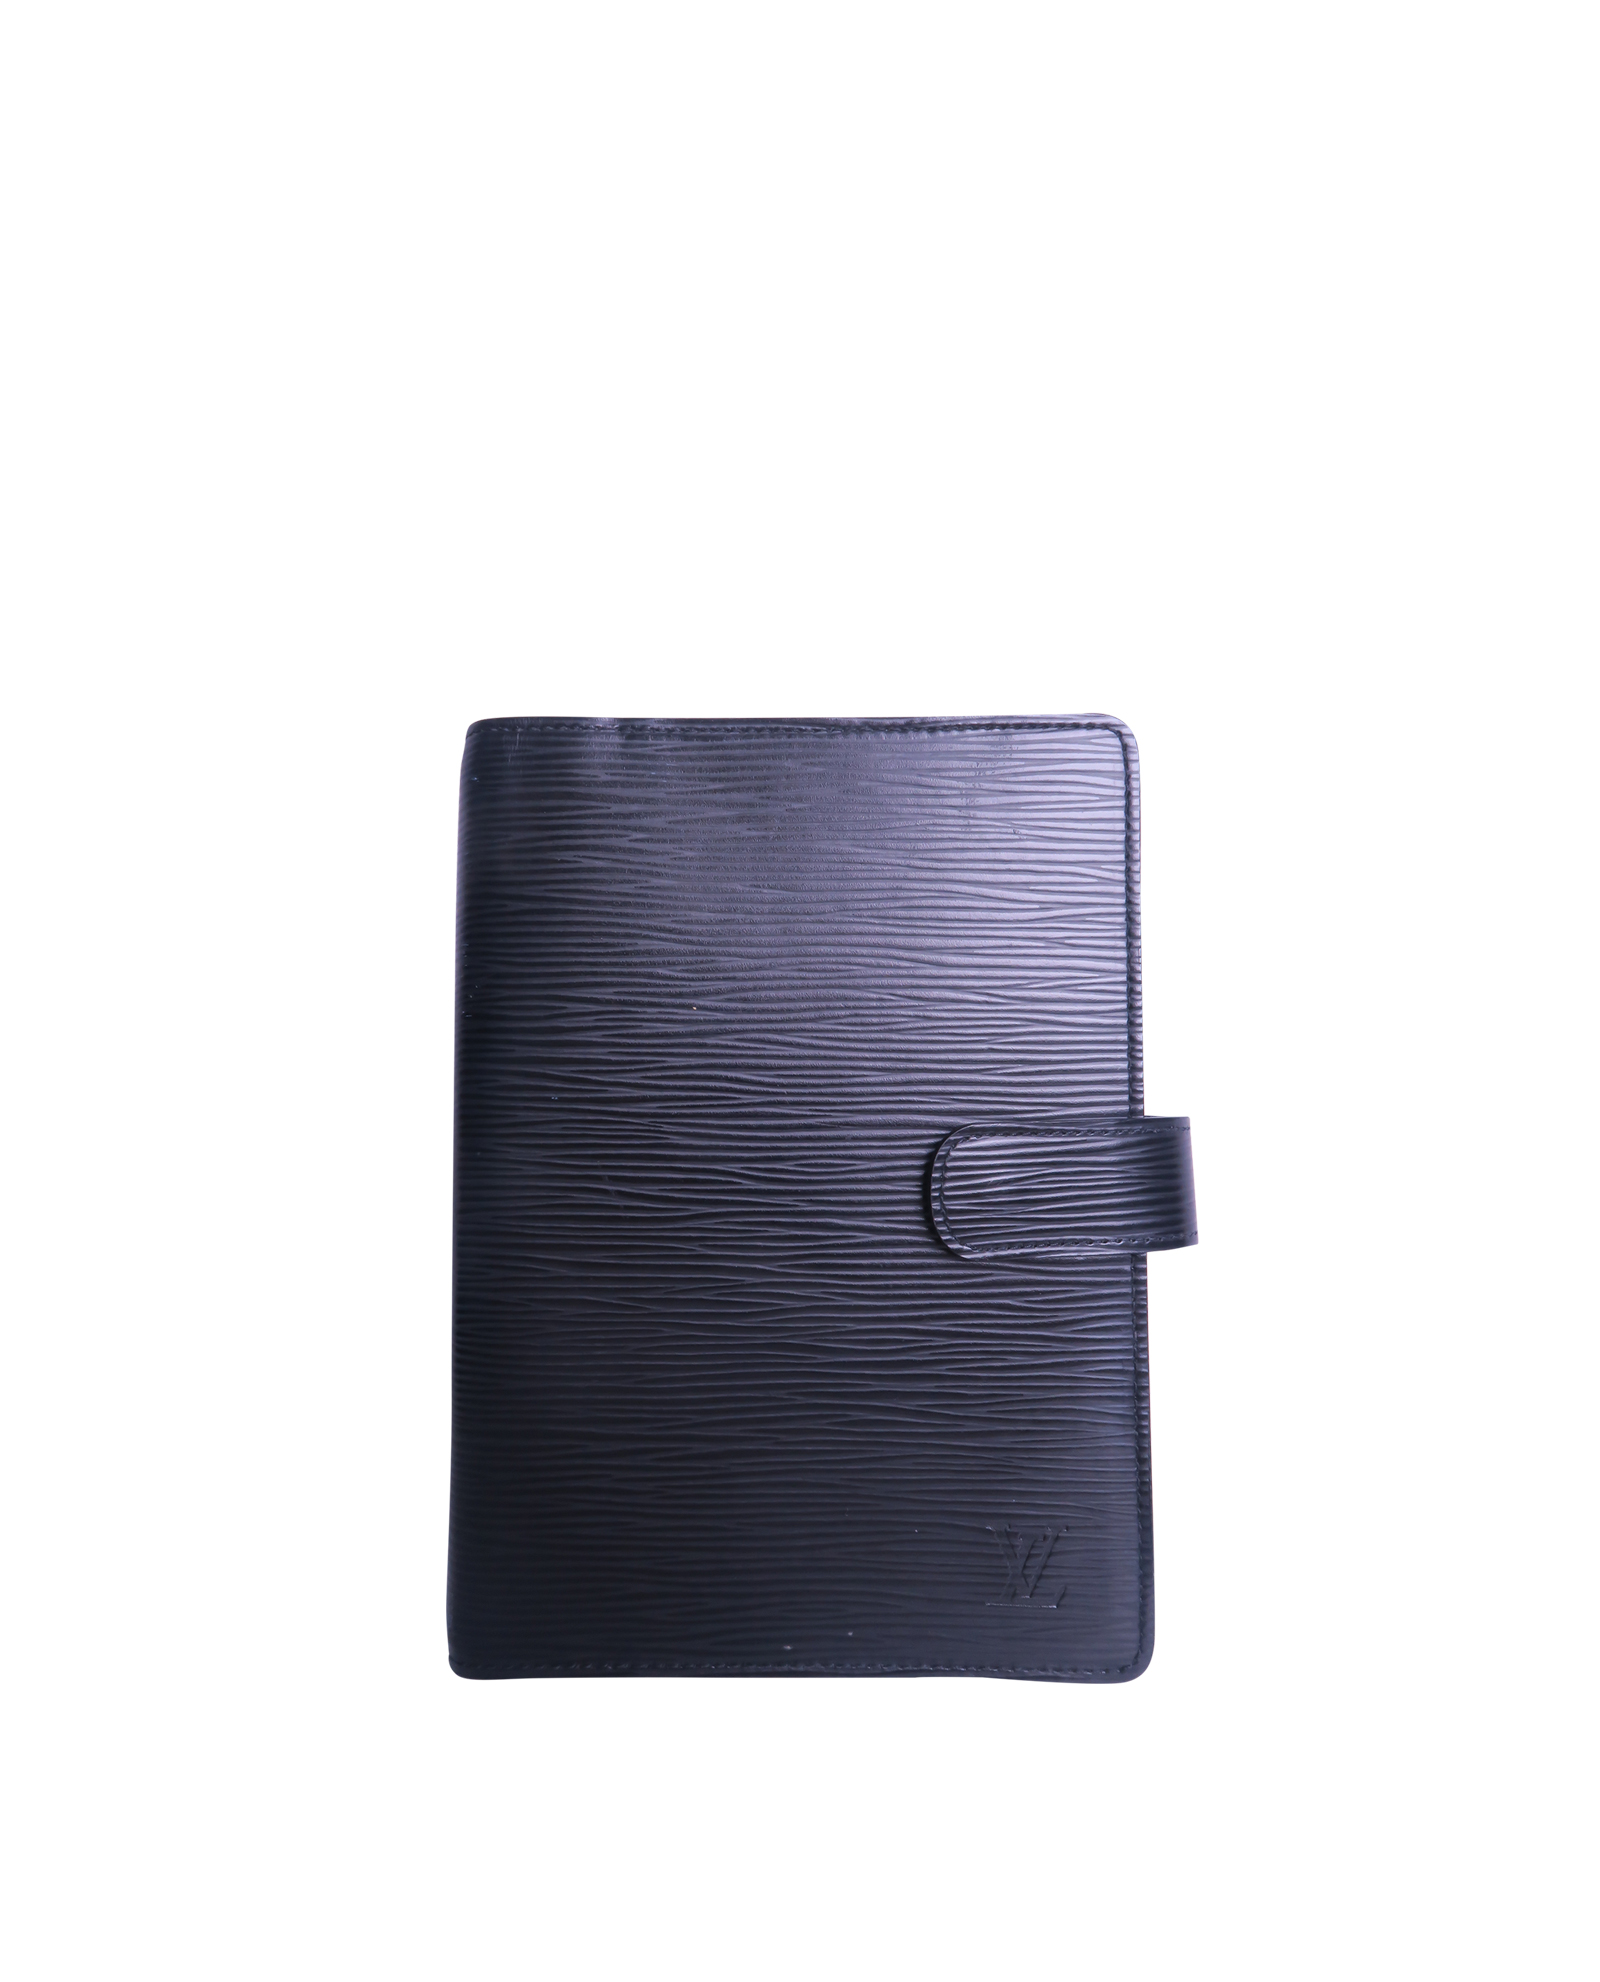 Louis Vuitton Agenda M, Small Leather Goods - Designer Exchange